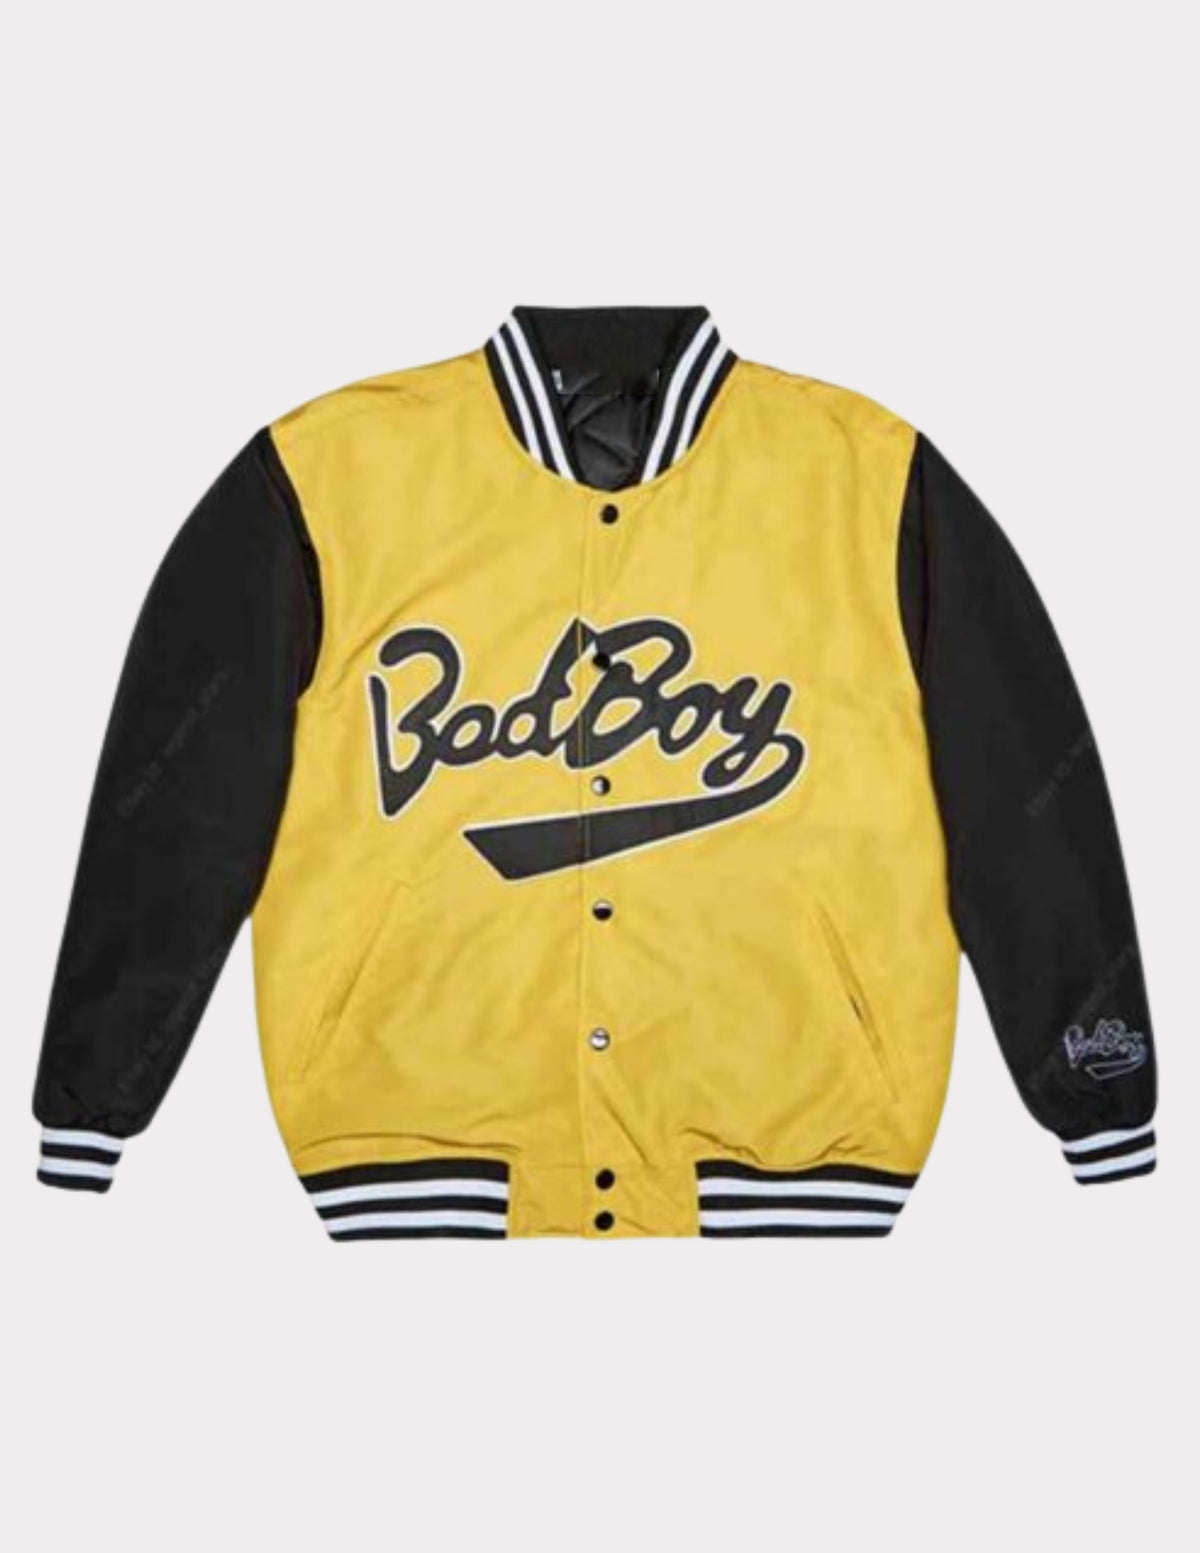 Biggie Smalls #72 Notorious BI.G. Bad Boy Varsity Jacket ...